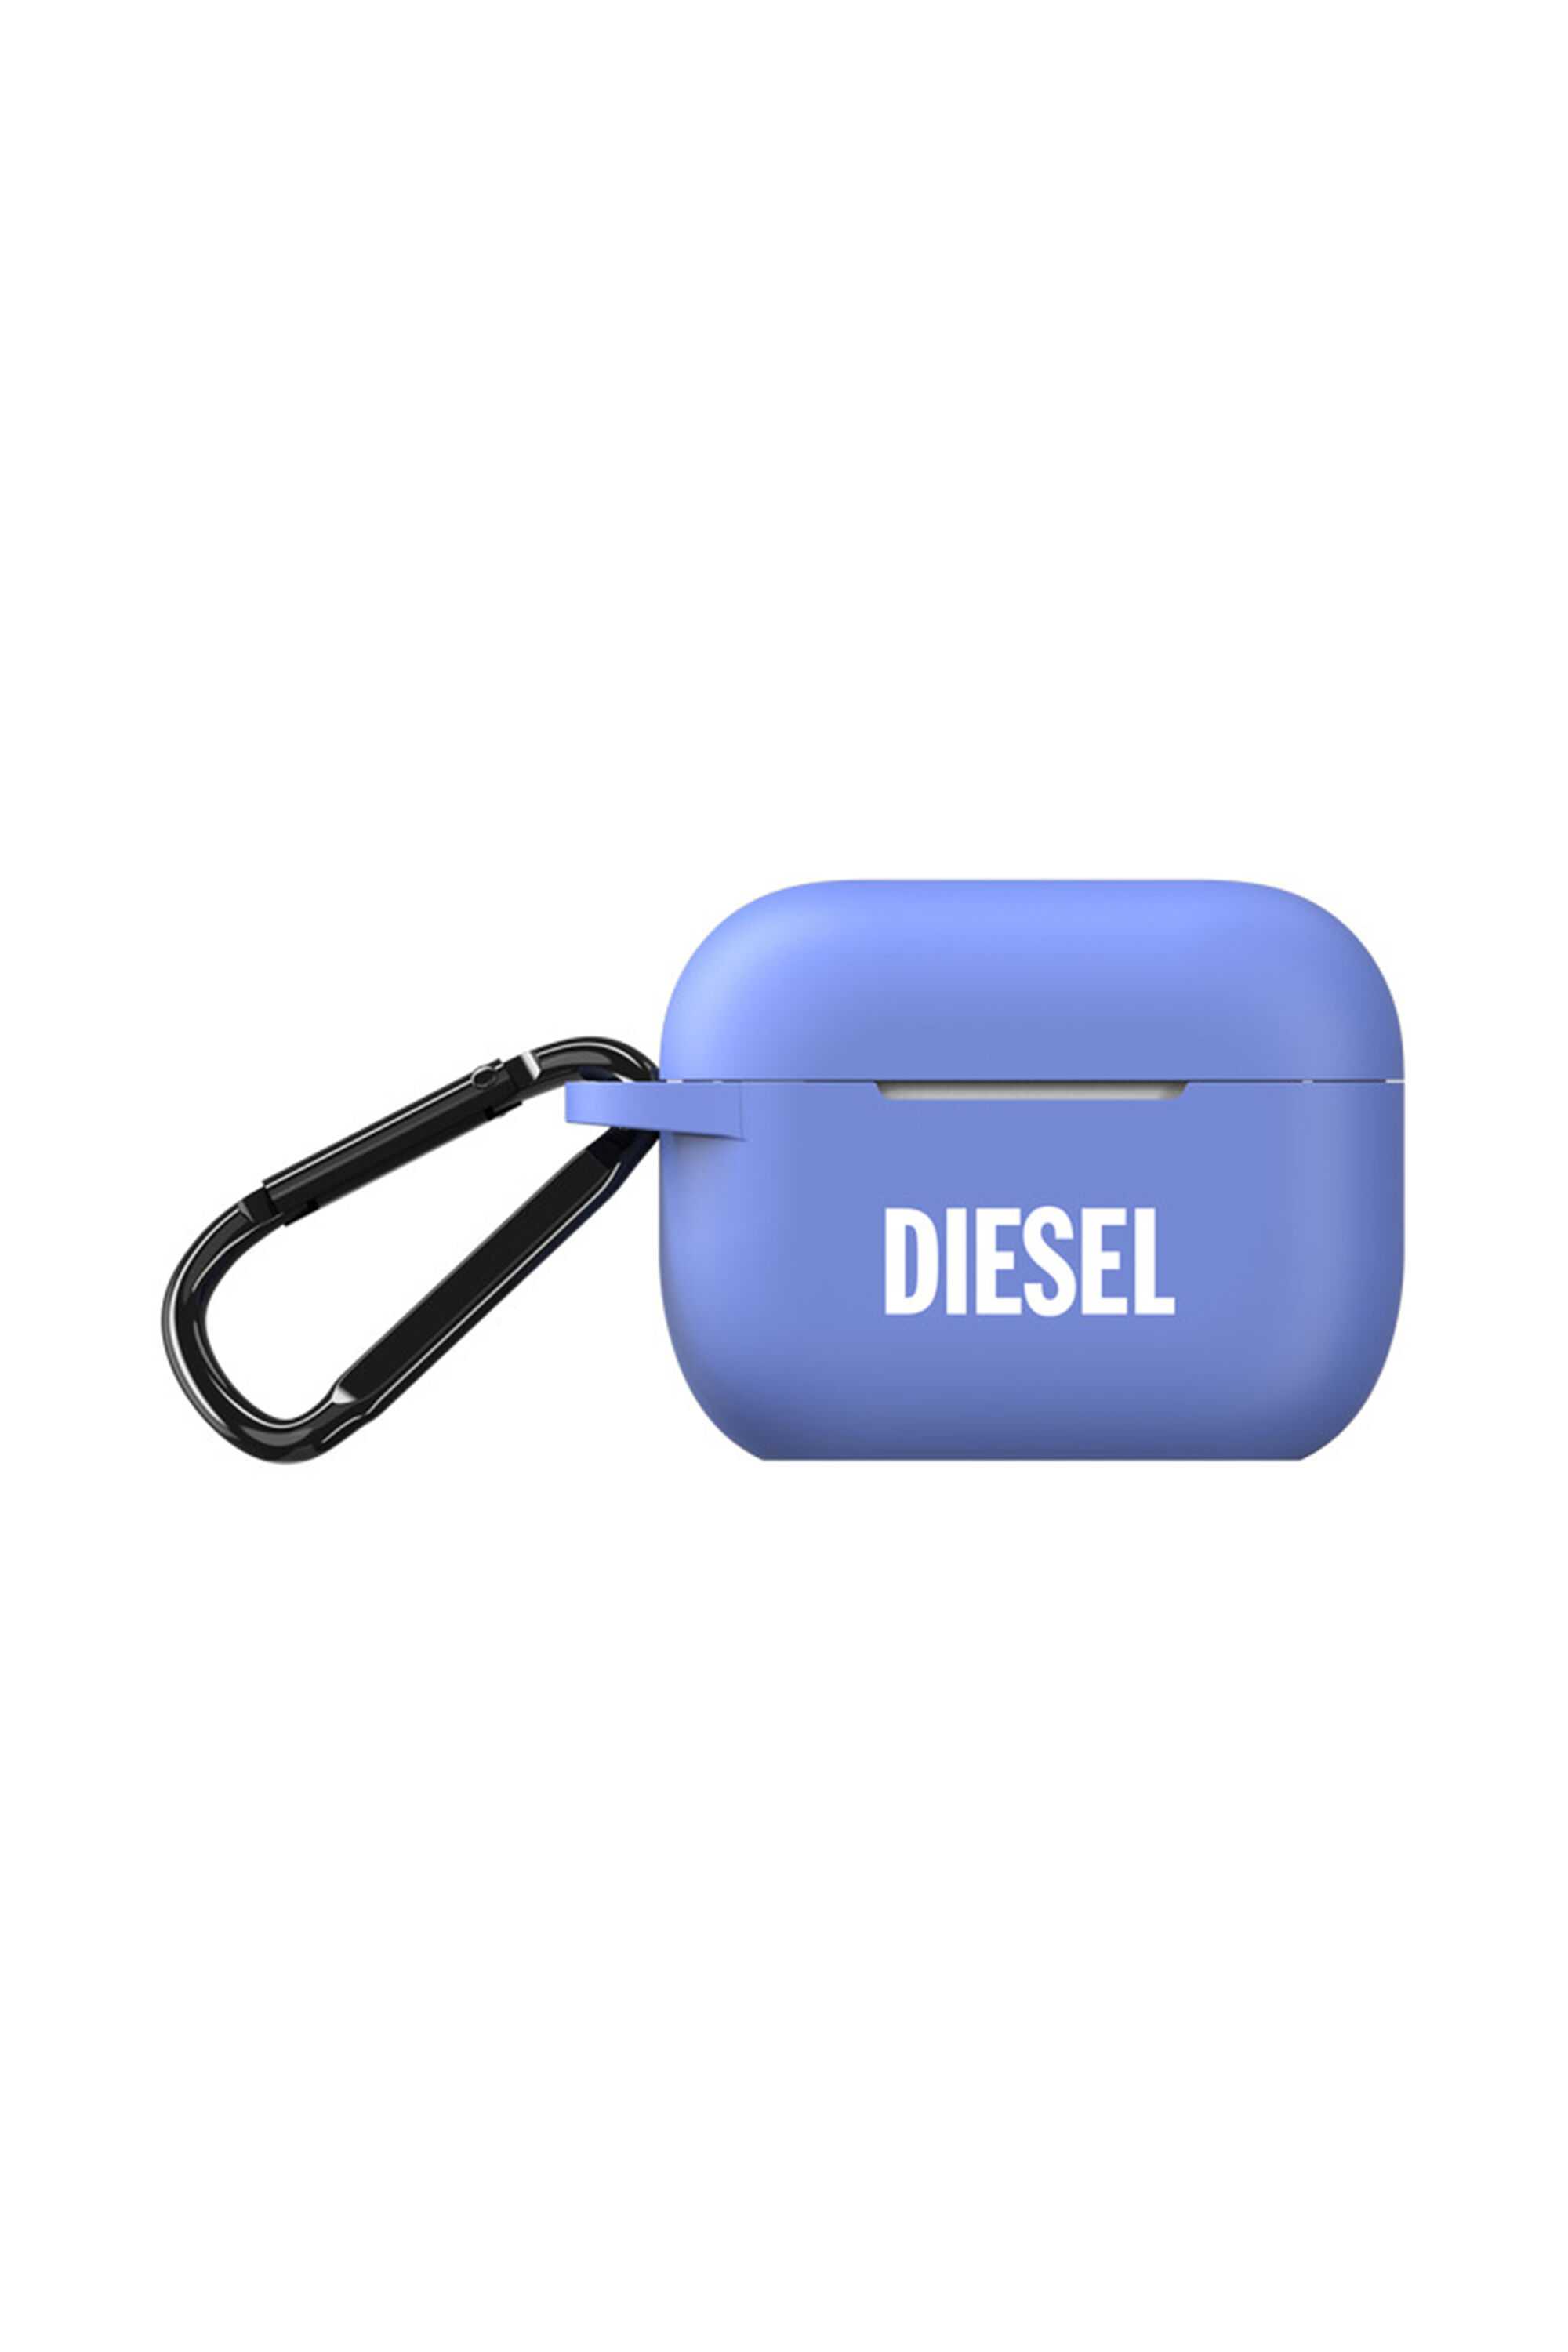 Diesel - 48321 AIRPOD CASE, Blue - Image 1